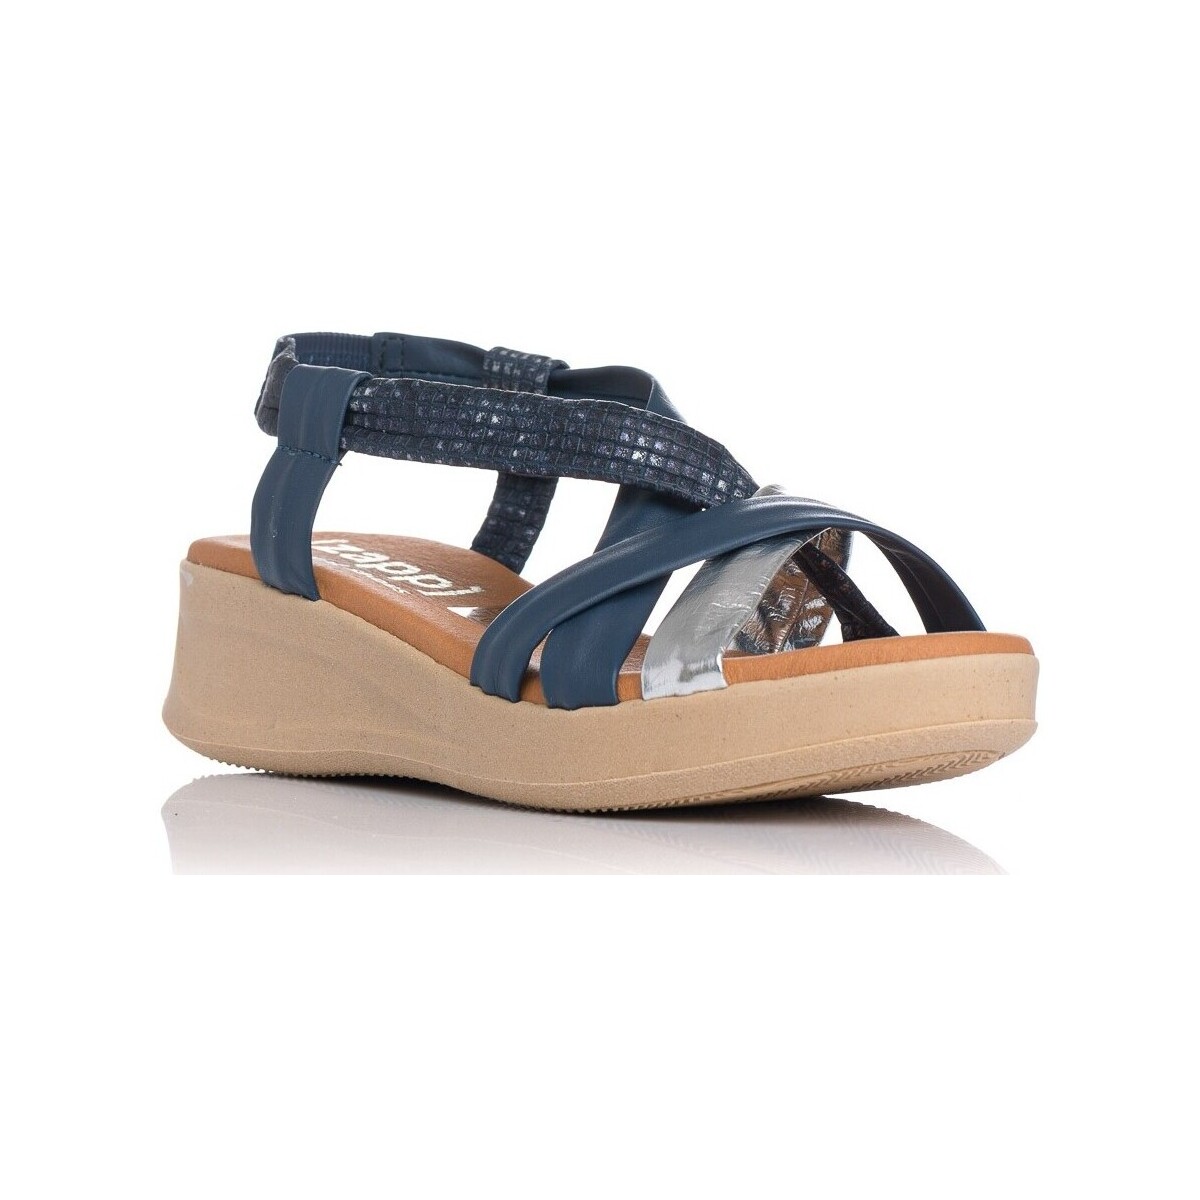 Schoenen Dames Sandalen / Open schoenen Zapp BASKETS  5185 Blauw